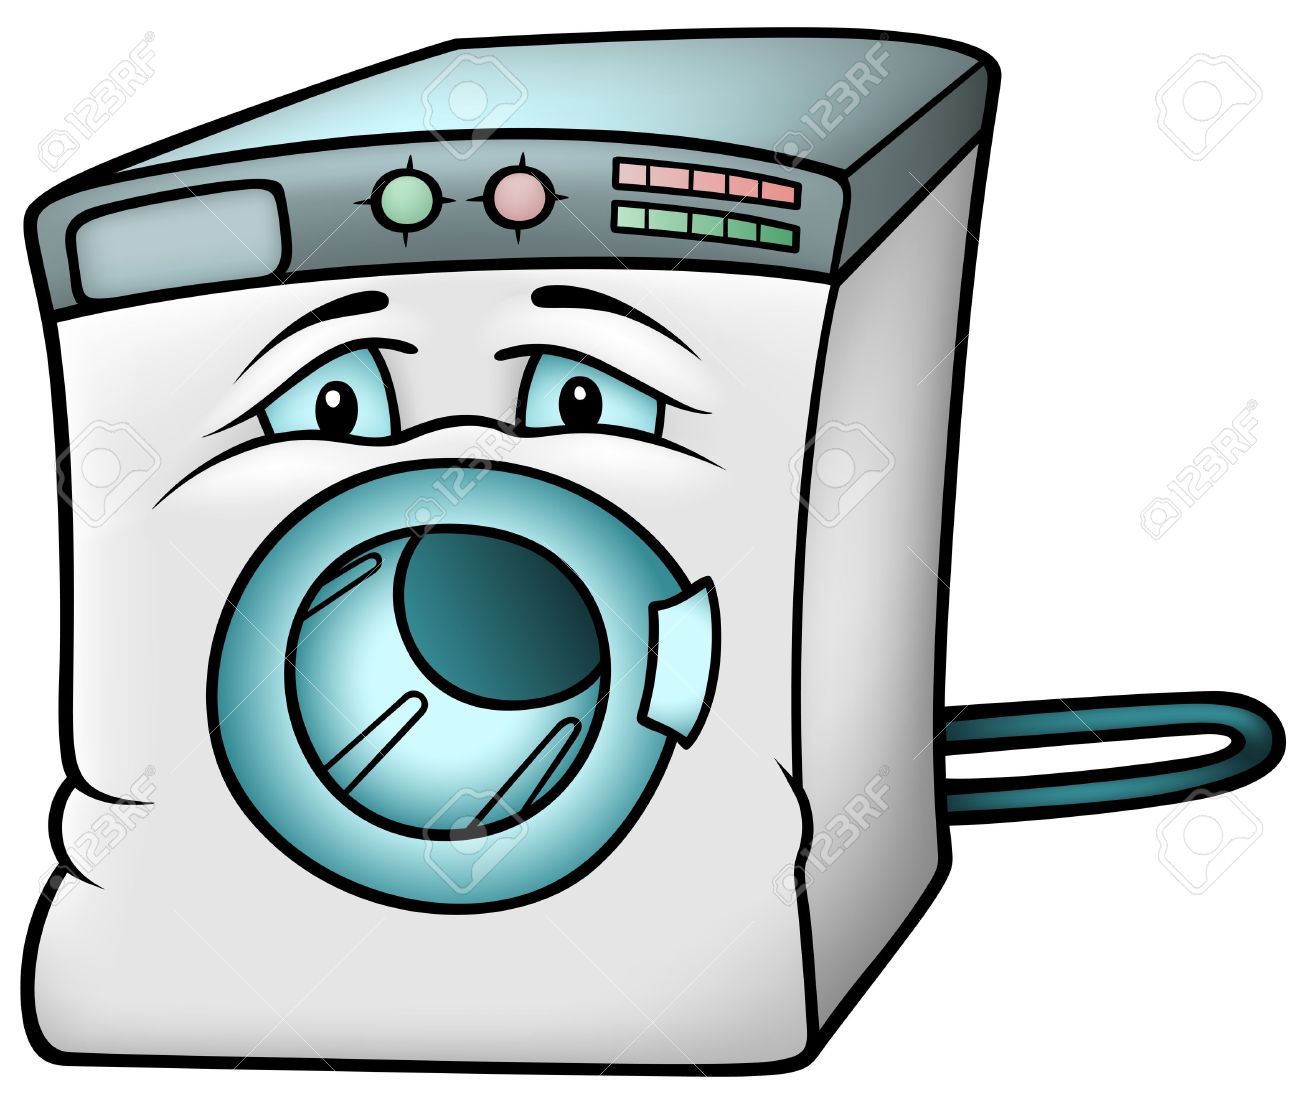 Washing Machine Clipart. Save